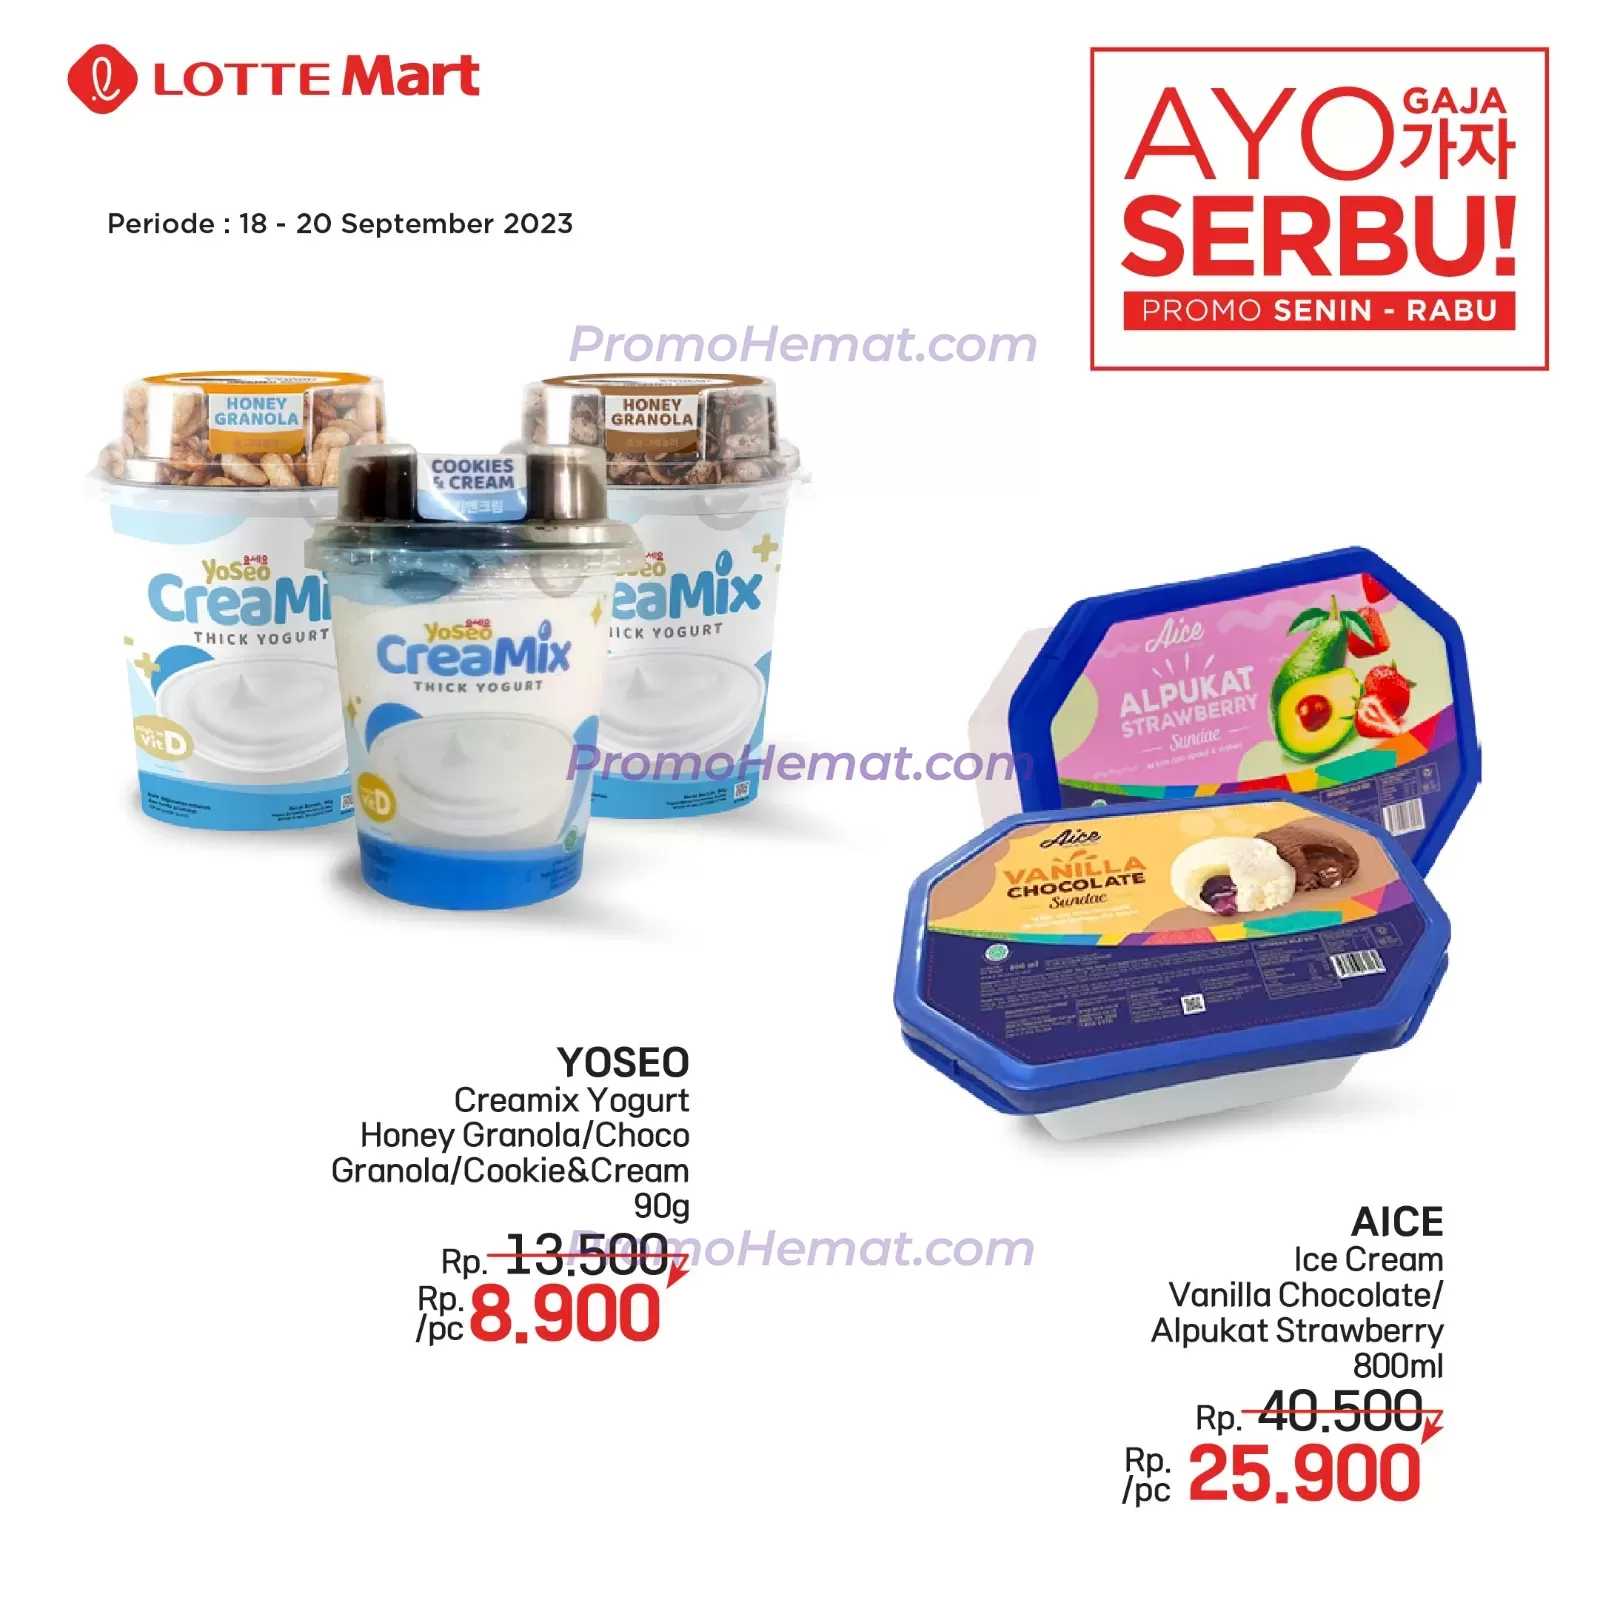 Promo Serbu Lotte Mart Periode 18 - 20 September 2023 image_5